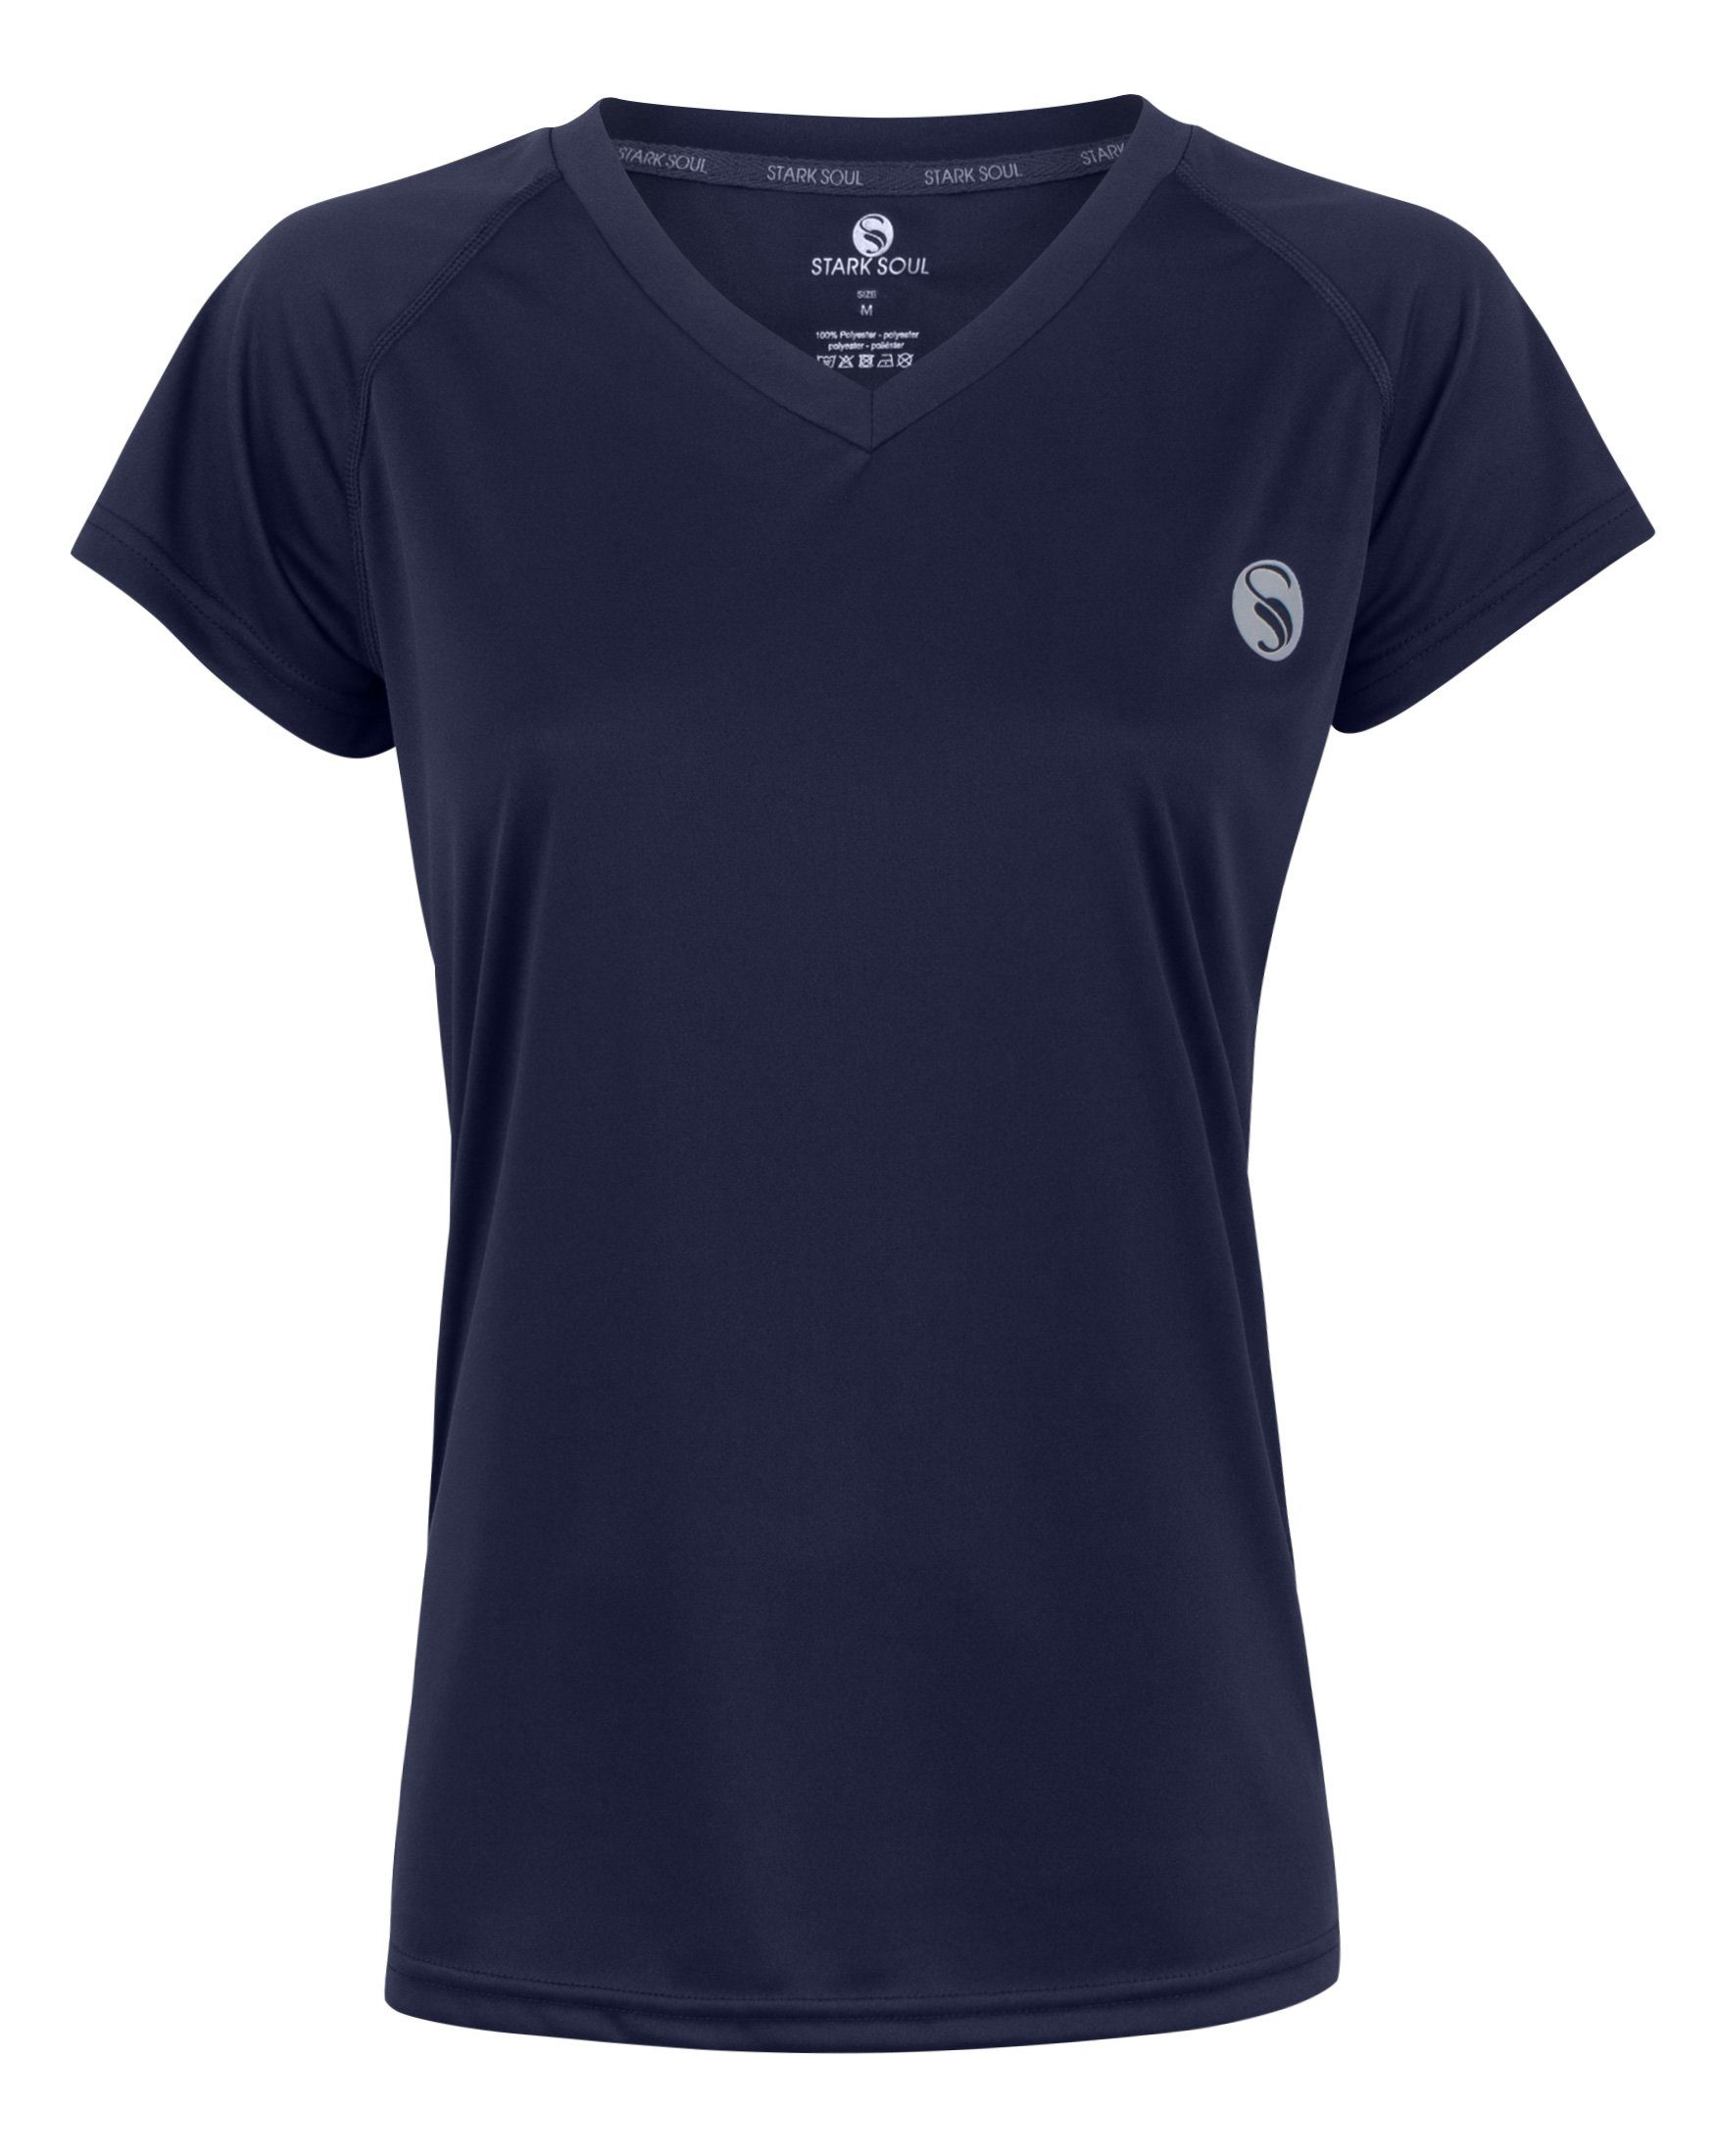 Stark Soul® Sporttop Sport Shirt aus Quick Dry Material - Schnelltrocknend Marineblau